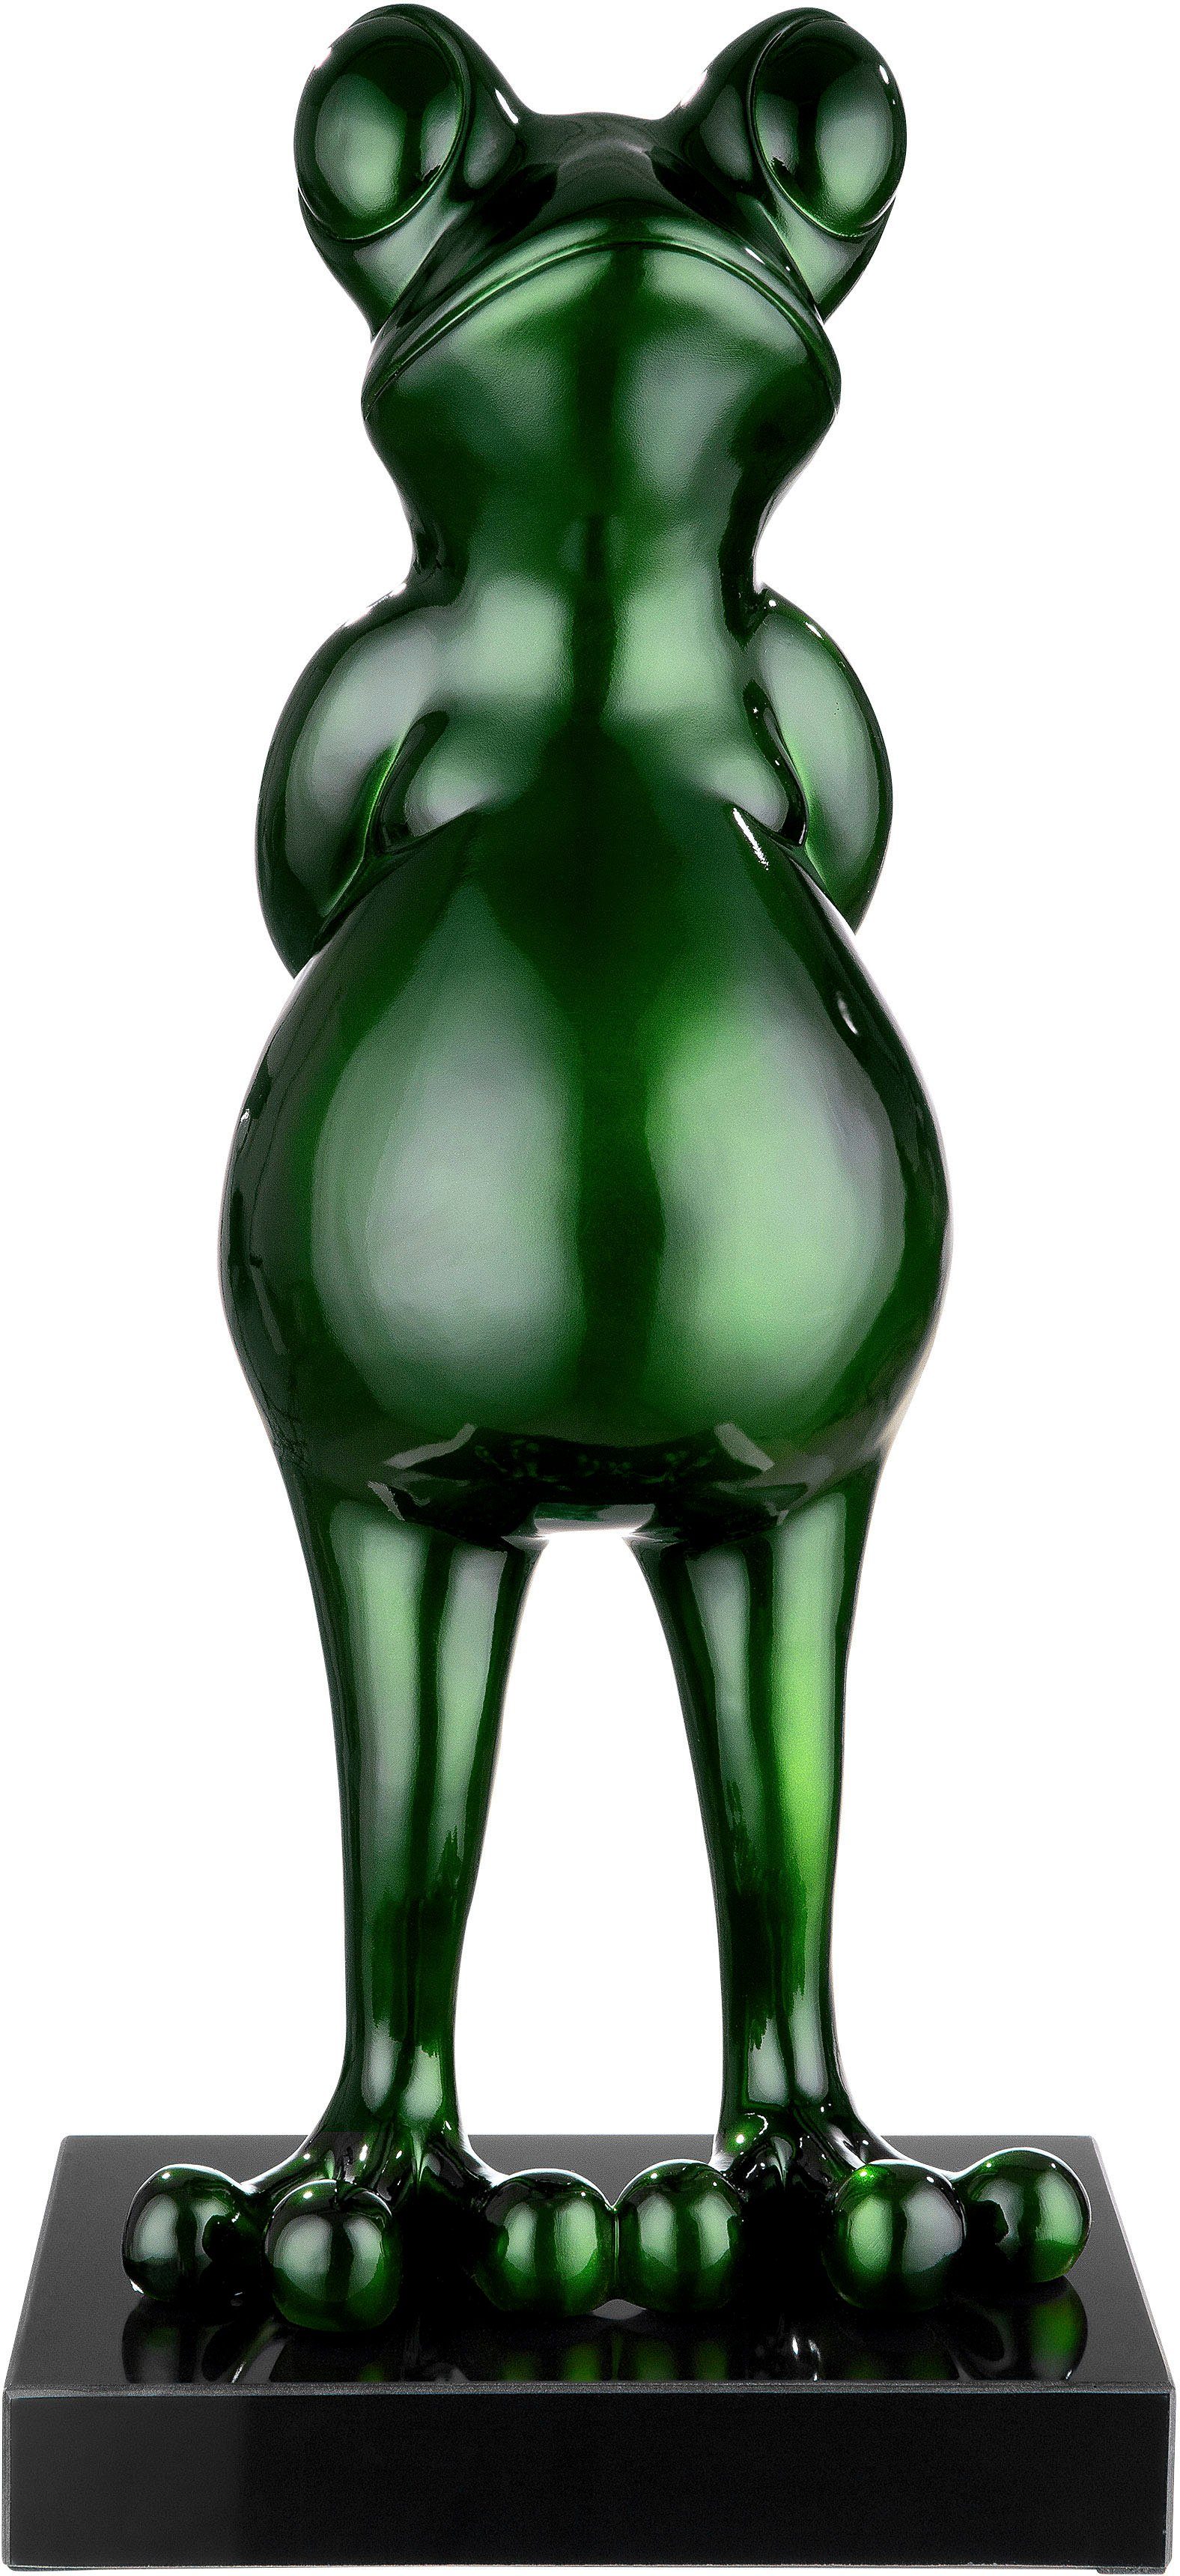 Casablanca by Gilde Tierfigur Skulptur auf (1 Frog St), Marmorbase grün